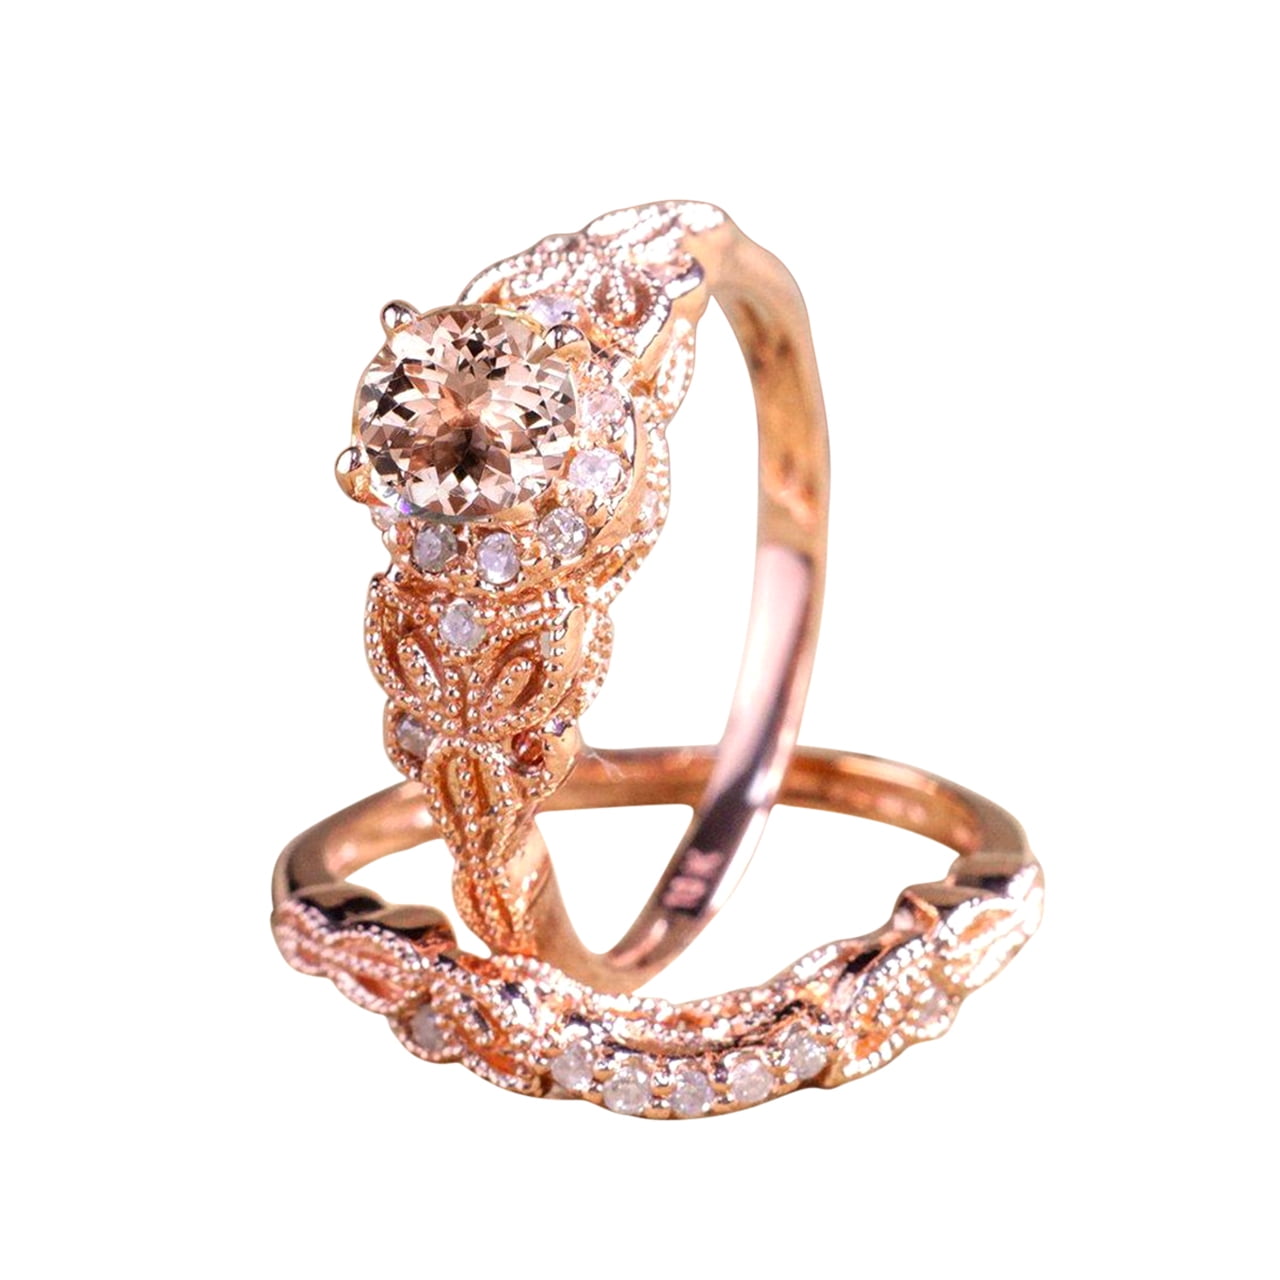 Art Deco Morganite Bridal Set 1.50 carat Morganite Diamond Halo Wedding Ring Set in 10k Rose Gold 